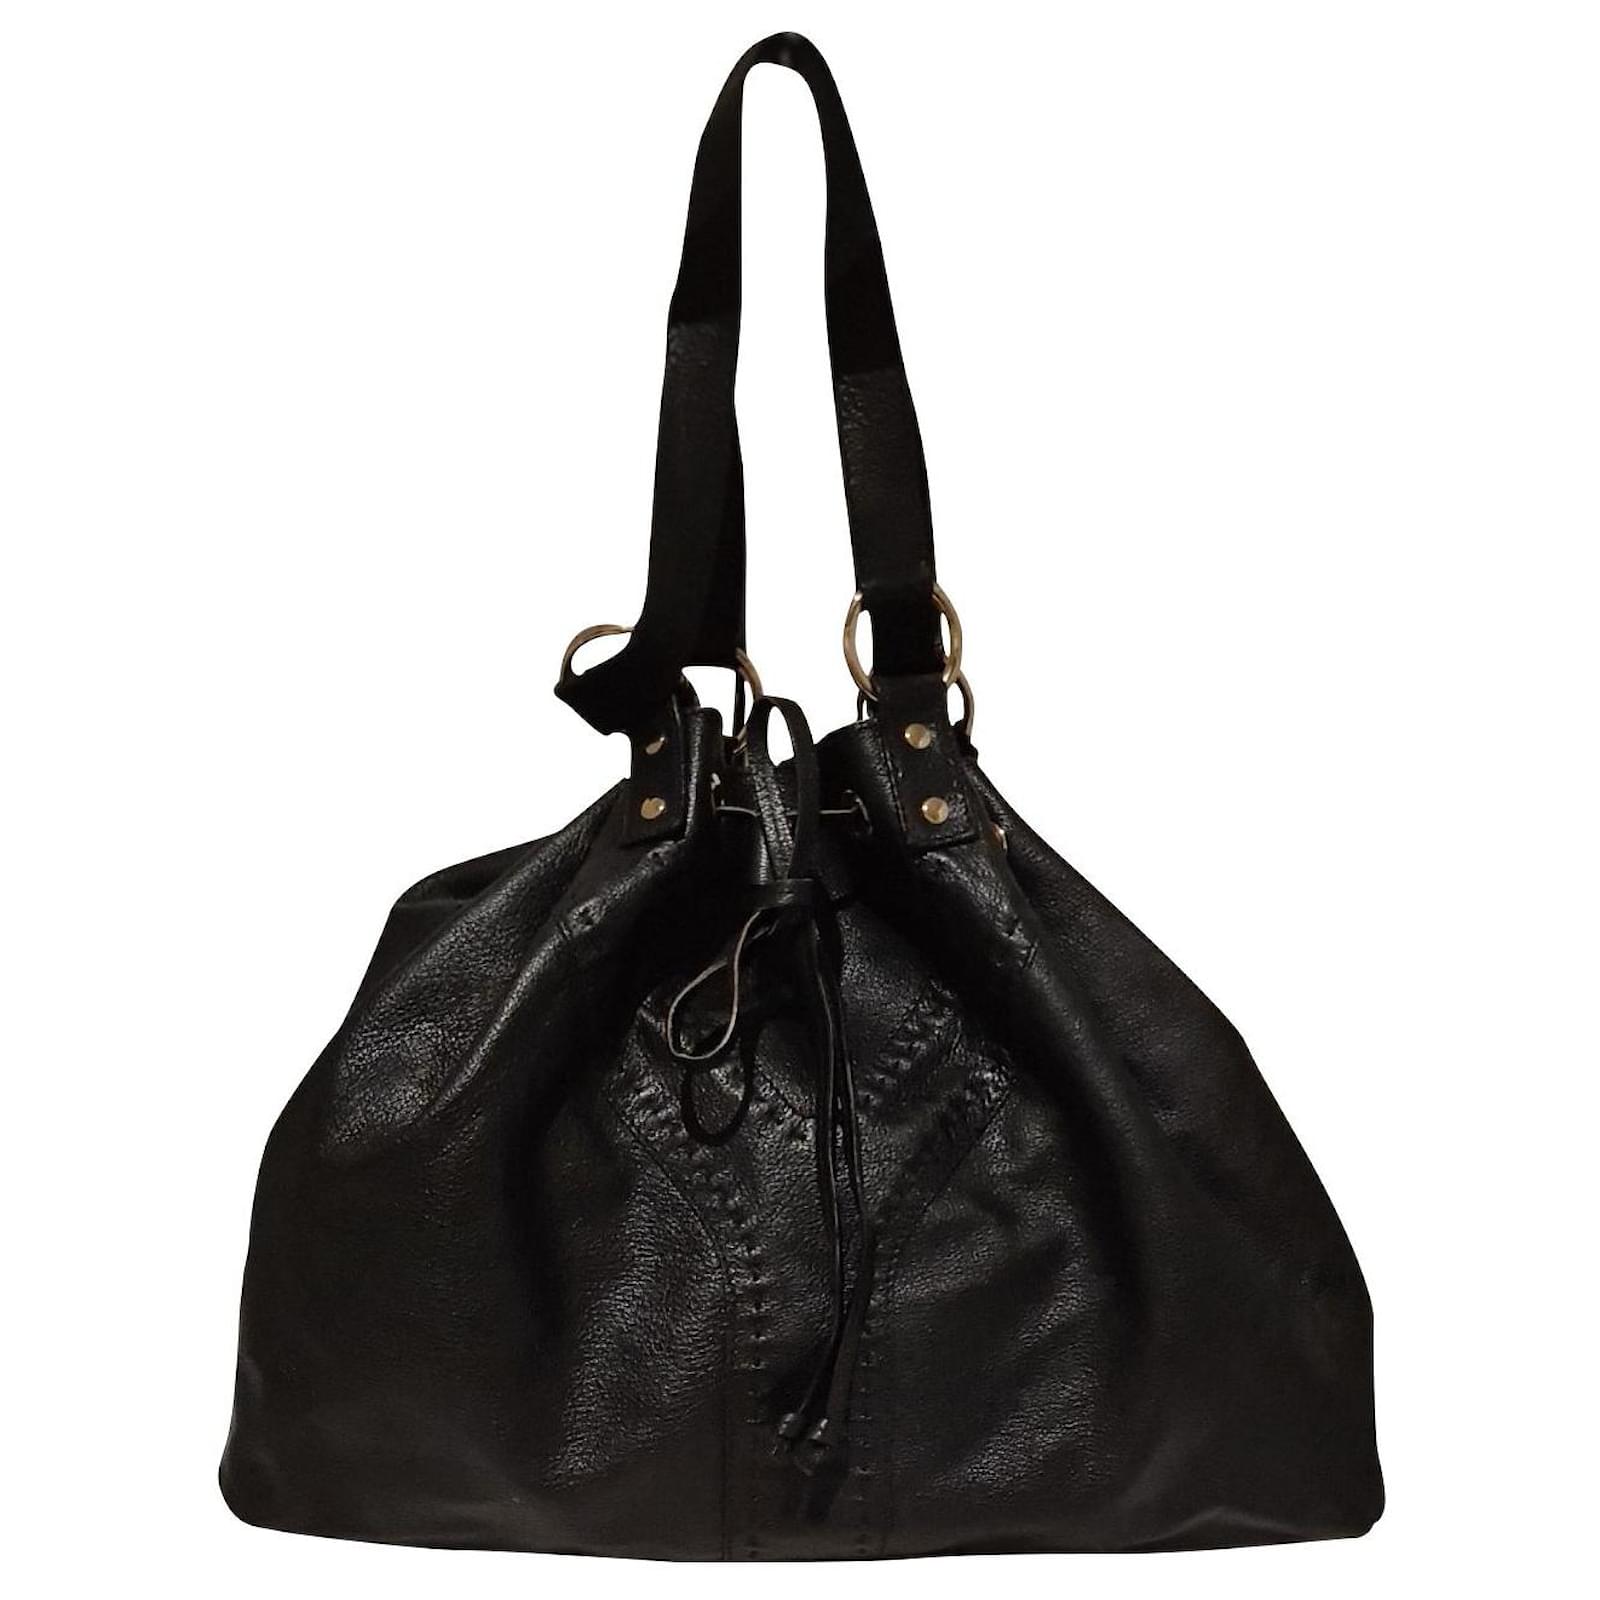 Yves Saint Laurent Handbags | Mercari